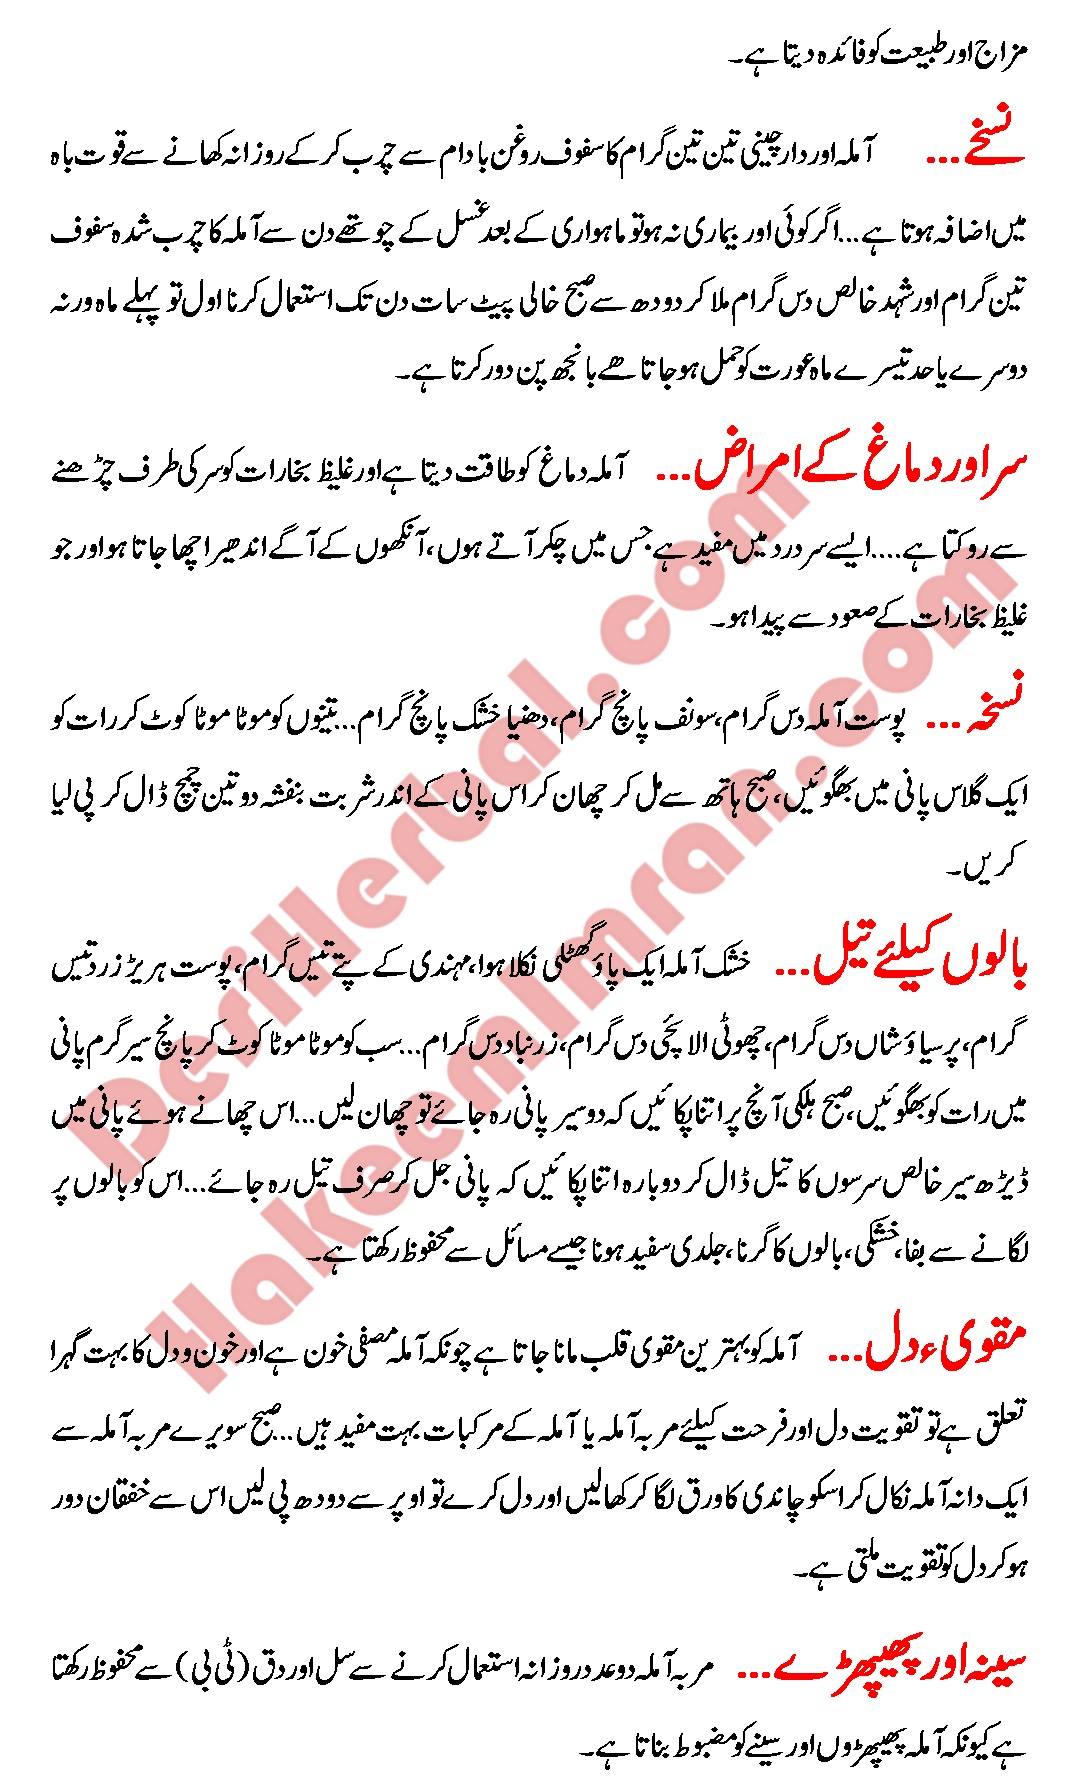 hakeemimran.com-Amla (Gooseberry) Kiya hy Aur Amla Benefits in Urdu 2